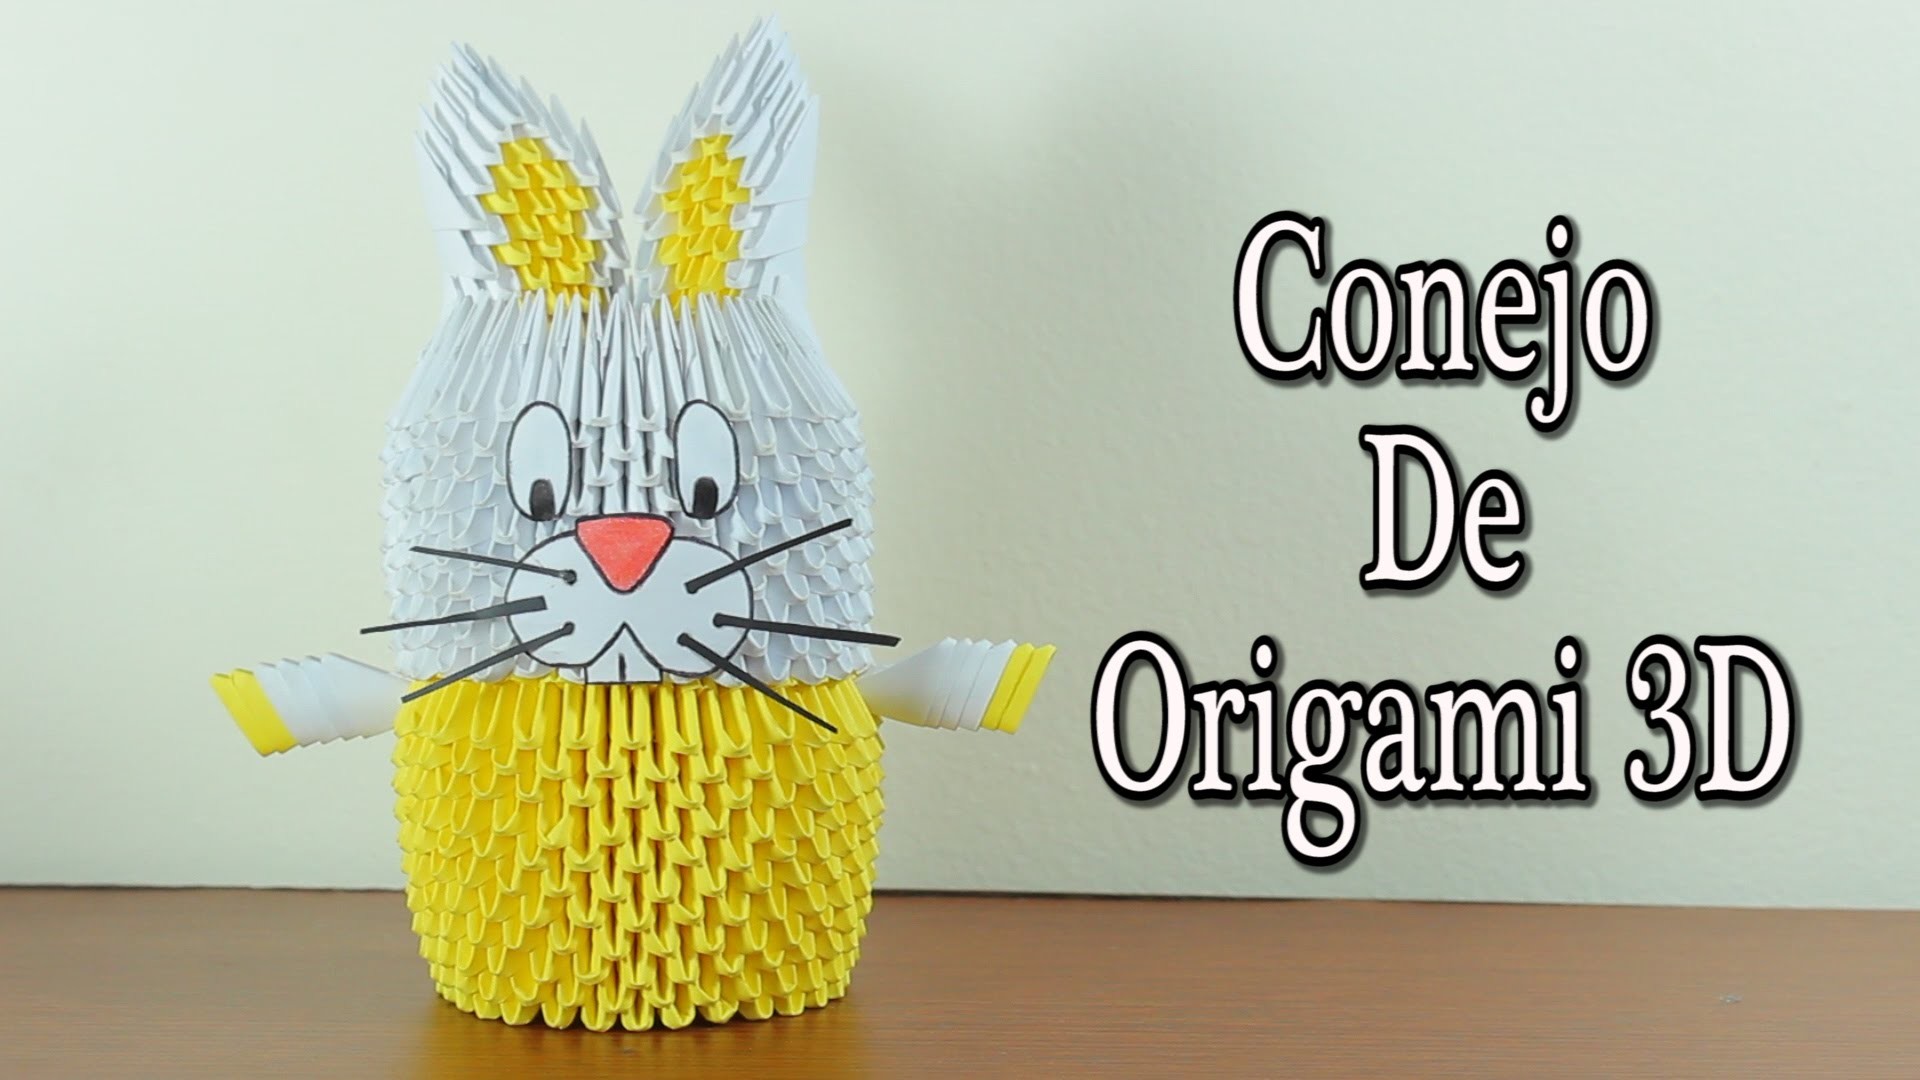 Rabbit. Conejo De Origami 3D TUTORIAL!